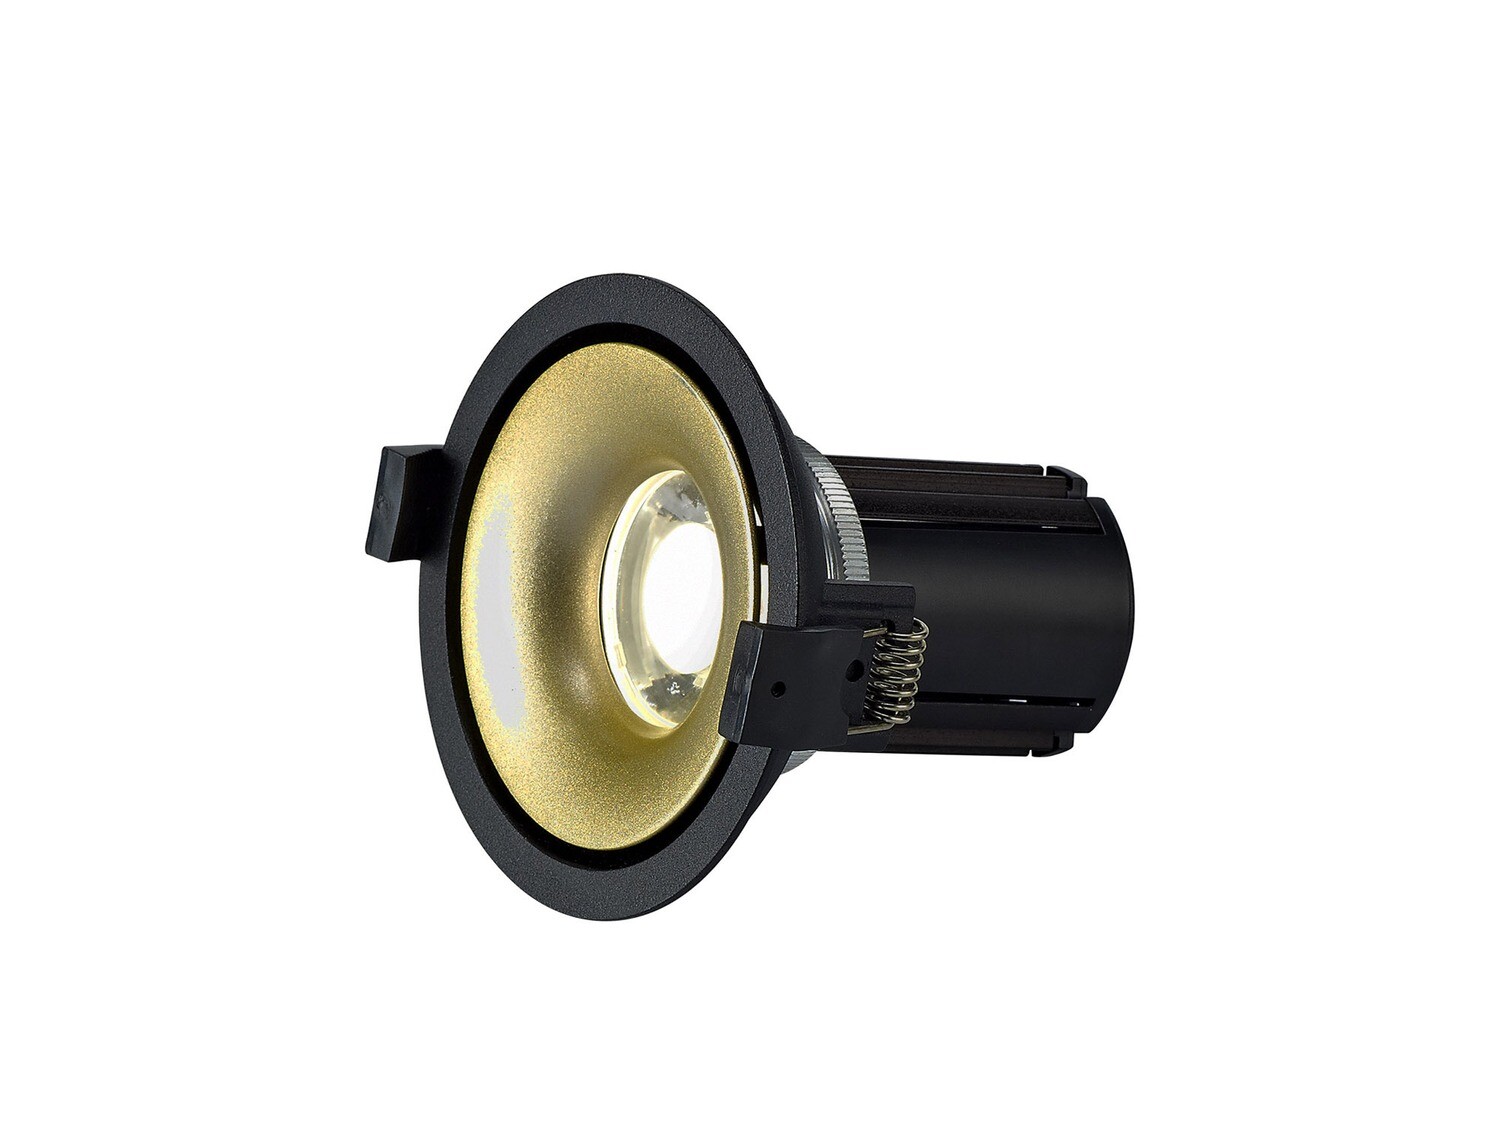 BOLOR LED Spot-light 10W Black/Gold